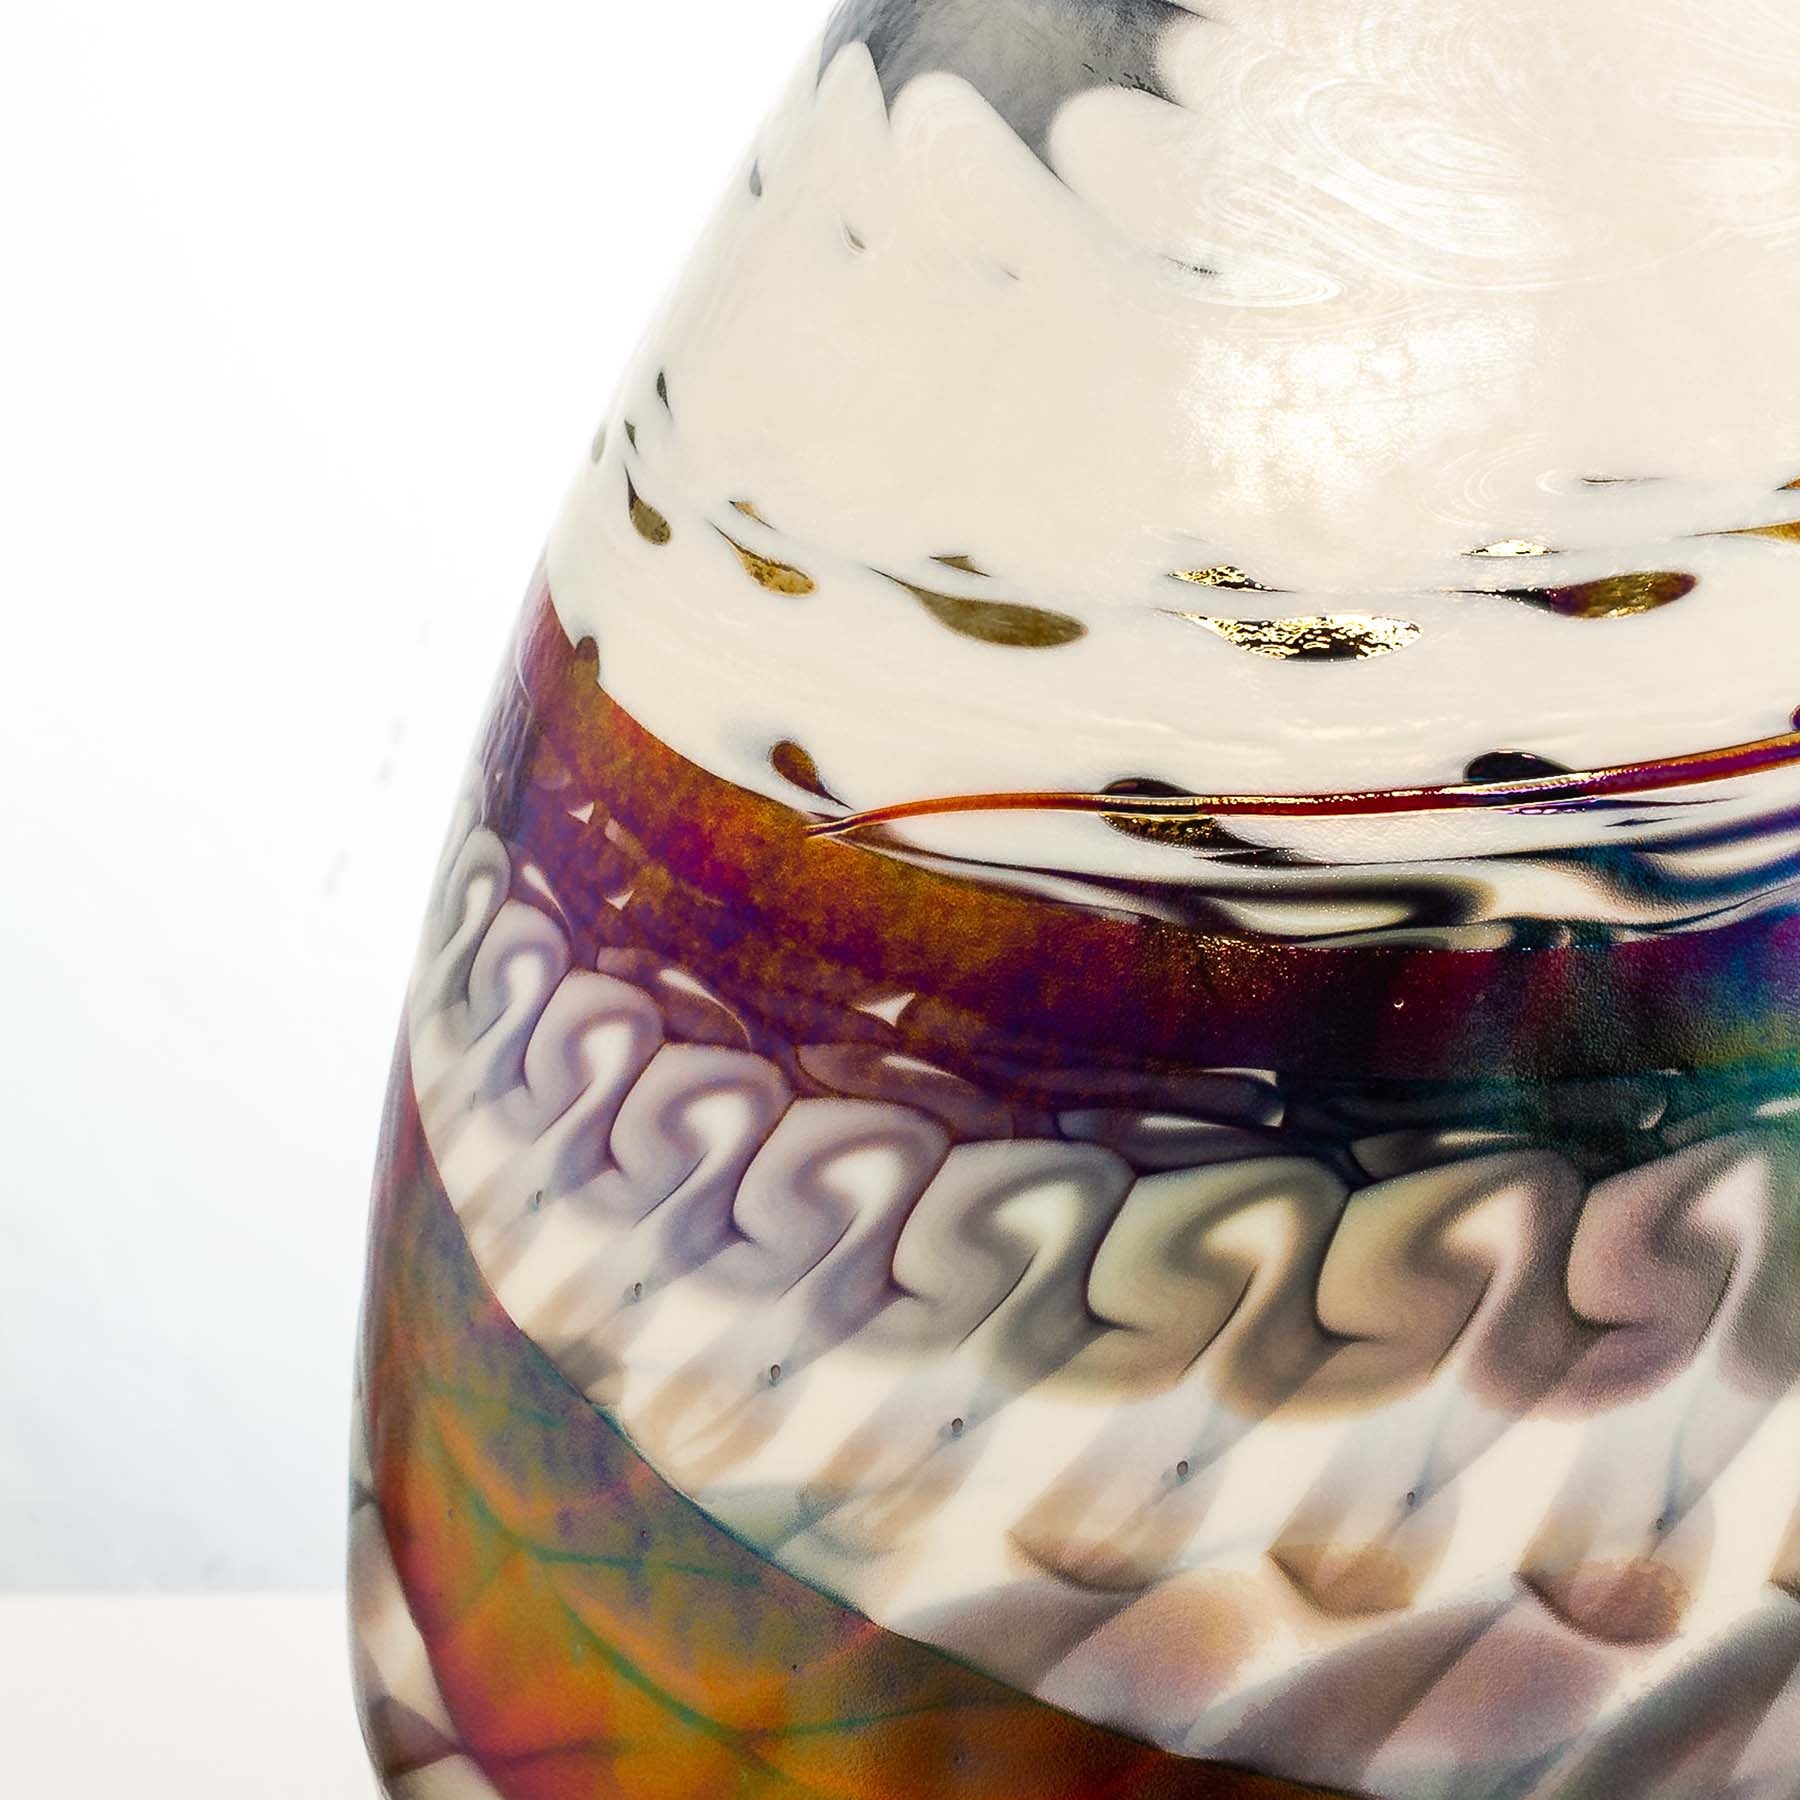 Elevated Zaire Vase - Glass of Murano